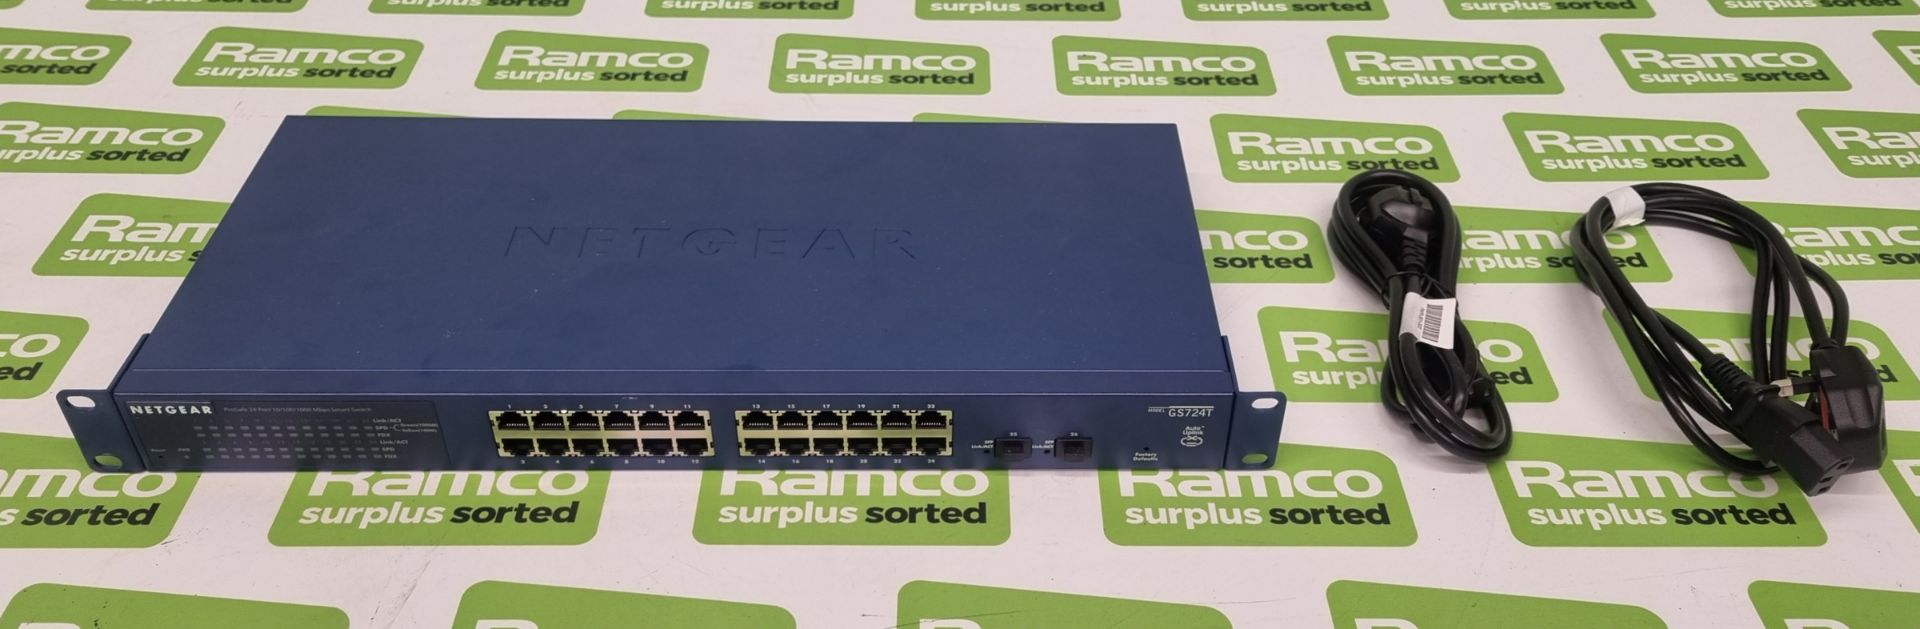 Netgear GS742T 24 port gigabit network switch (rack mountable) - Image 2 of 11